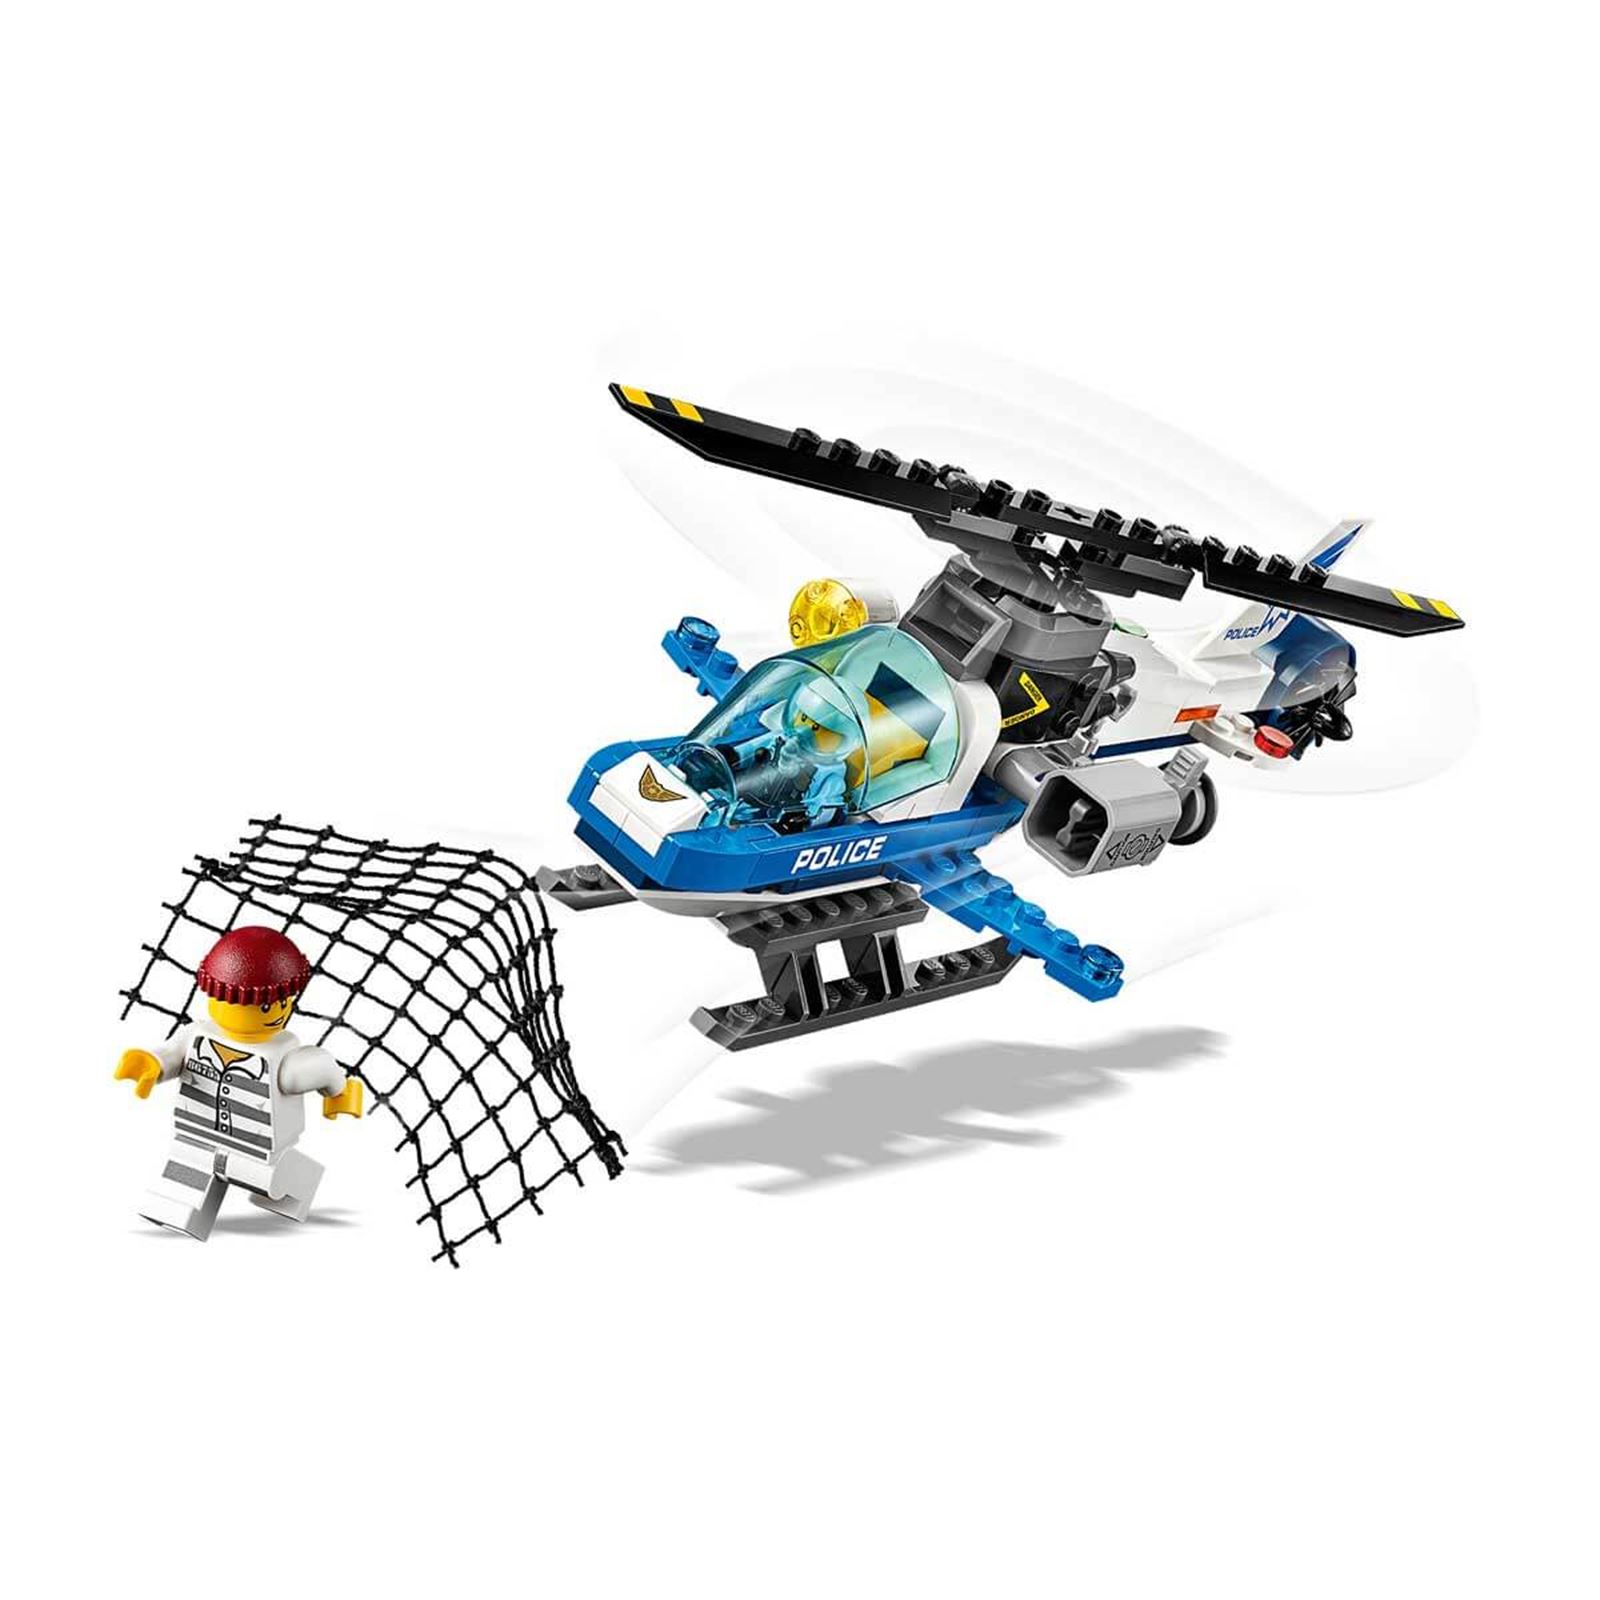 LEGO City Police Gökyüzü Polisi İnsansız Hava Aracı Takibi 60207